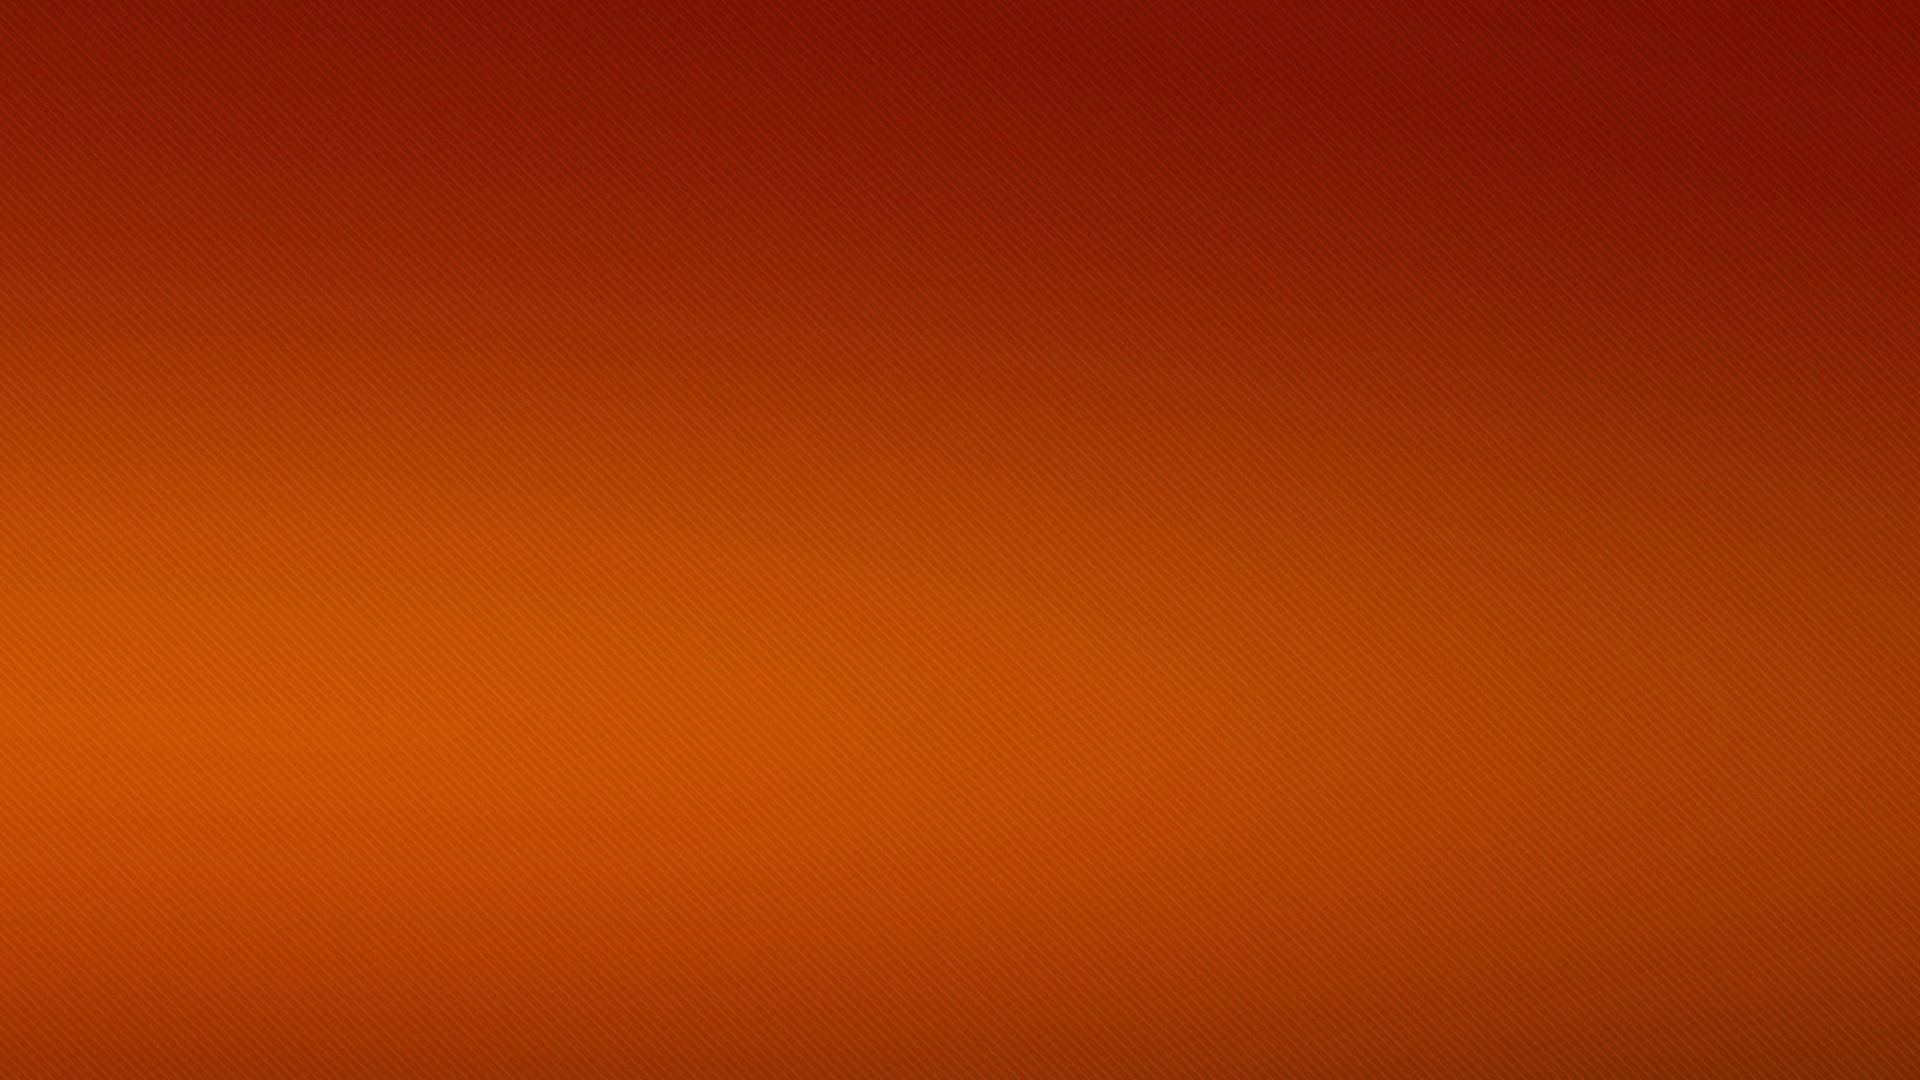 Solid Orange 2560 X 1440 Wallpaper